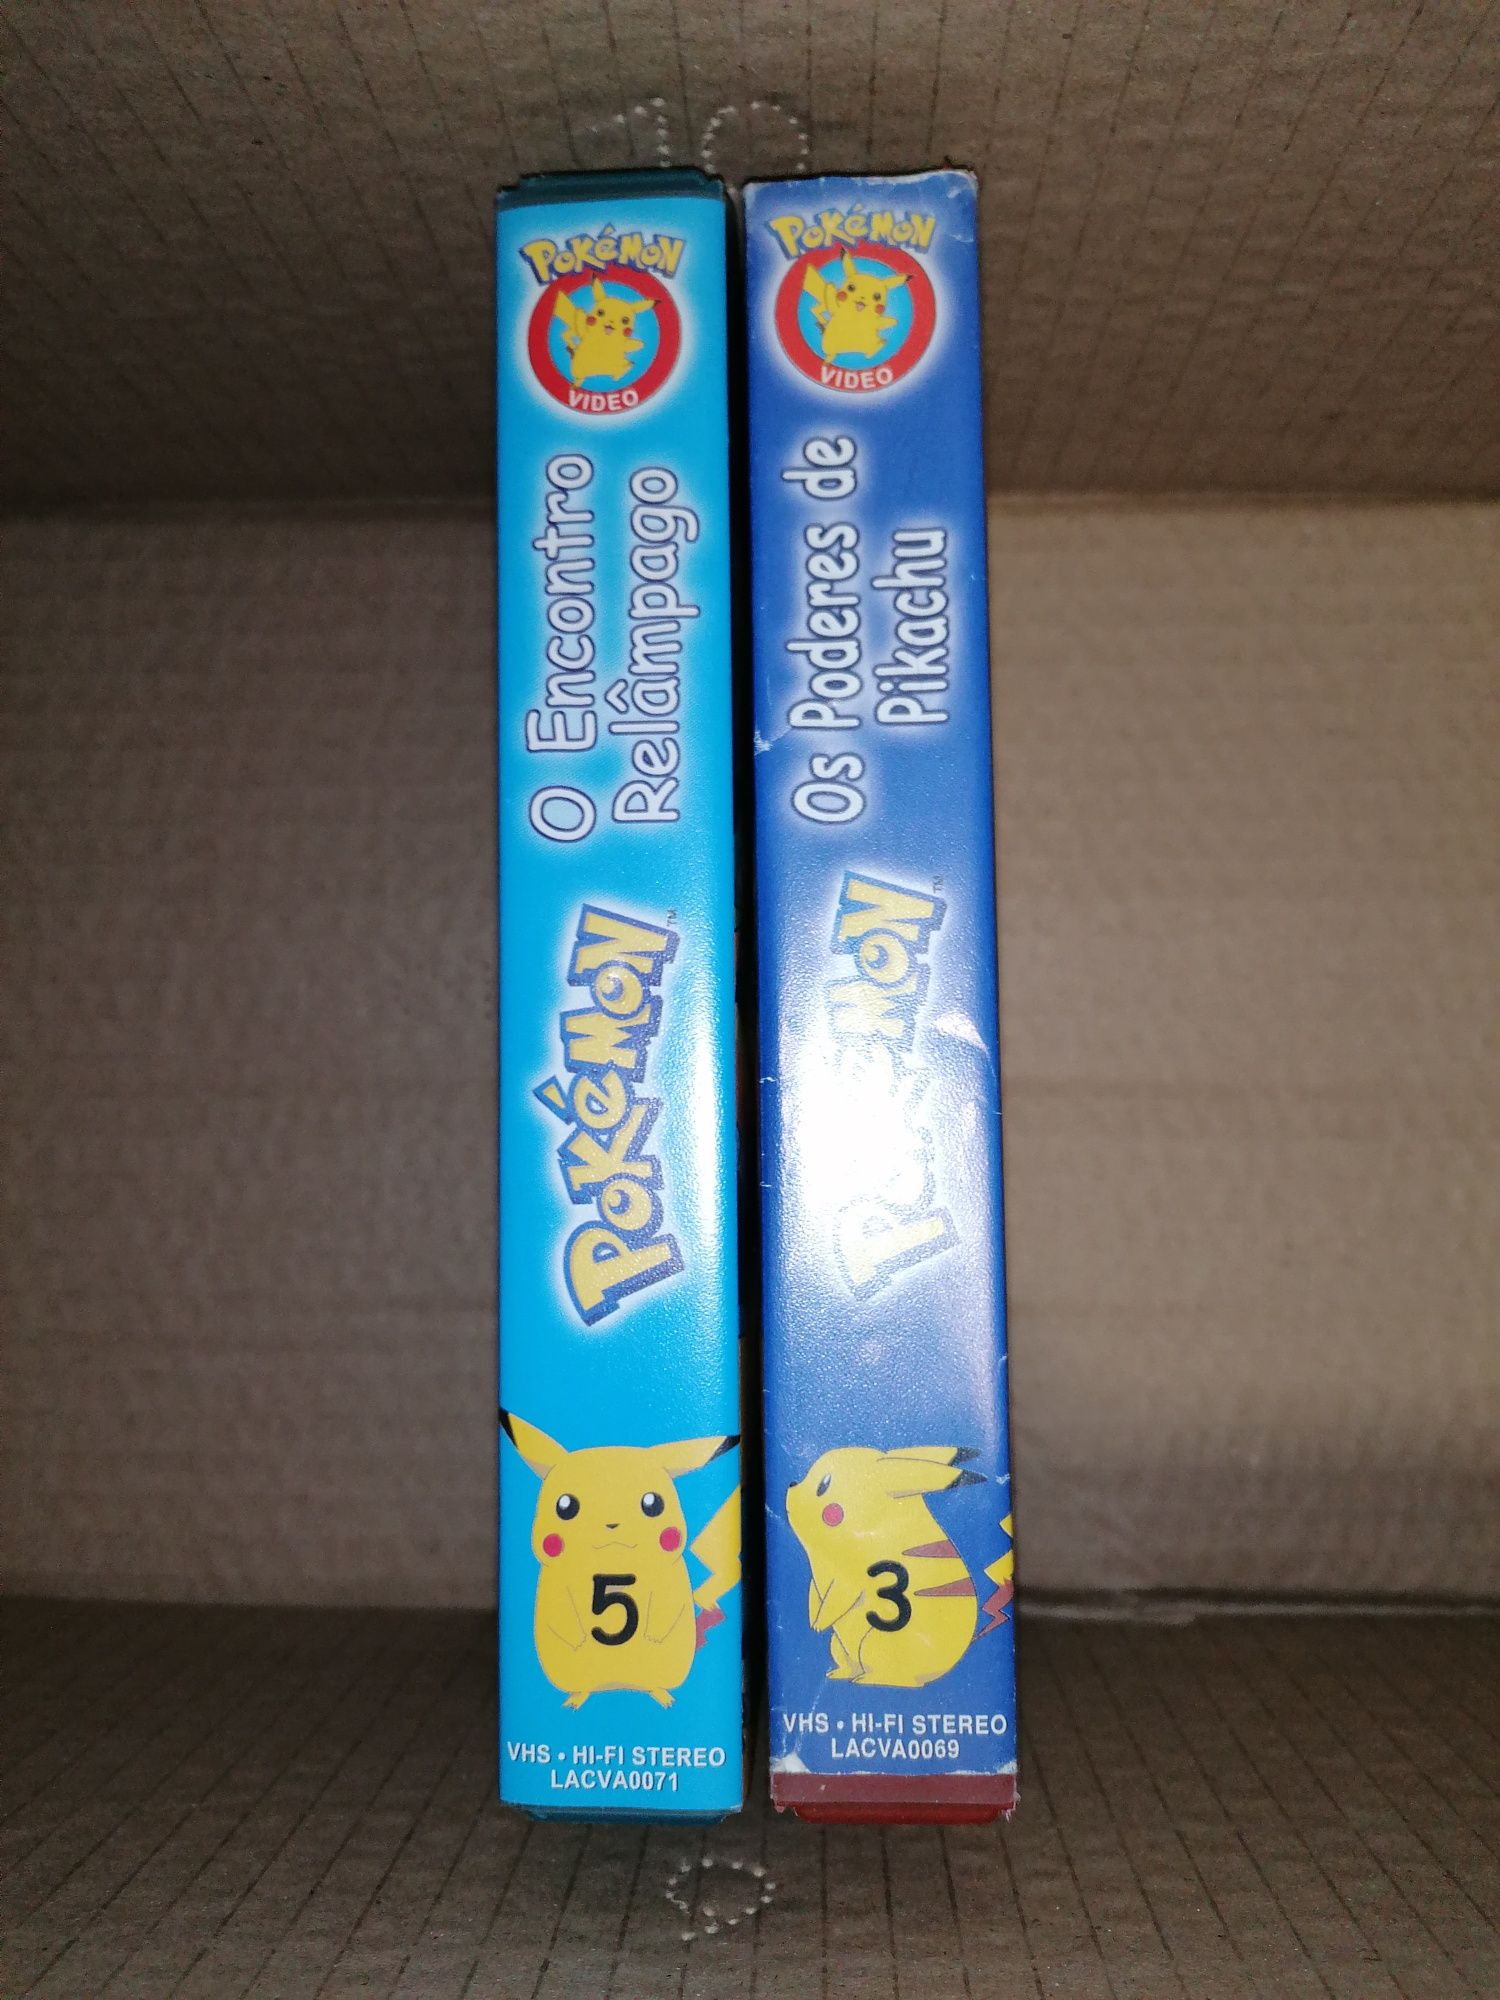 VHS Pokémon (volume 3 e 5)